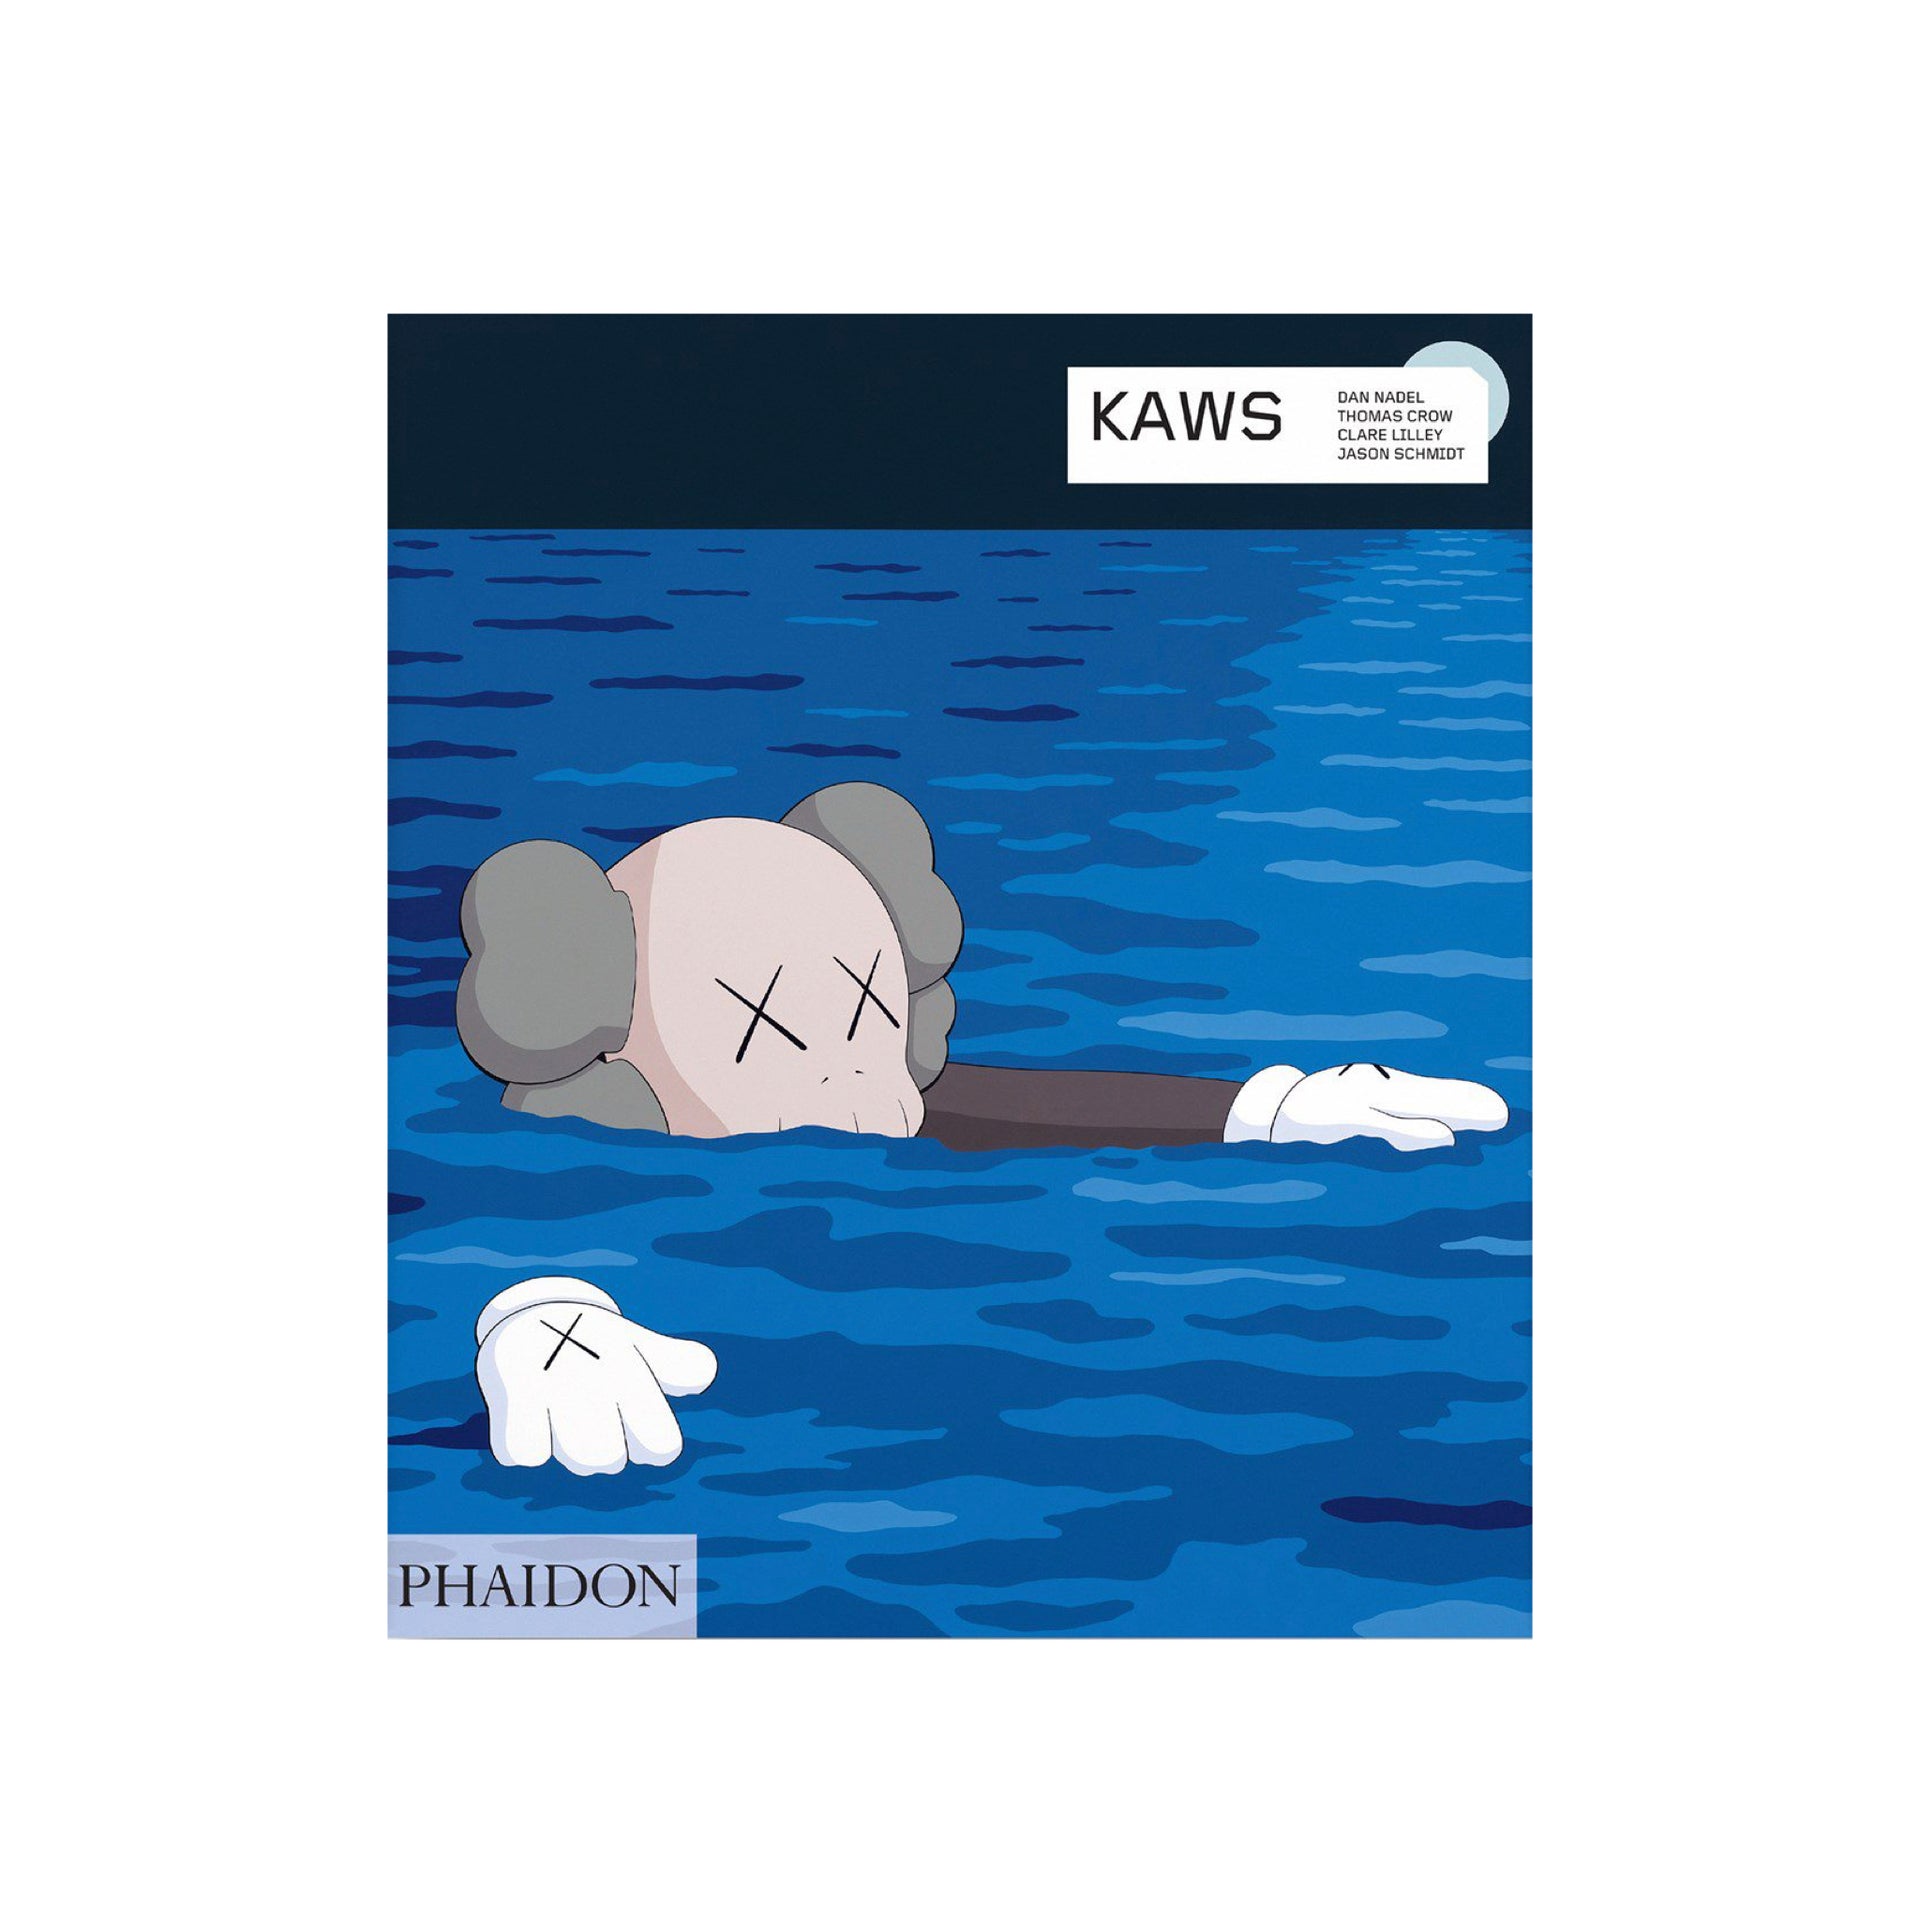 KAWS – Contemporary Artists Series